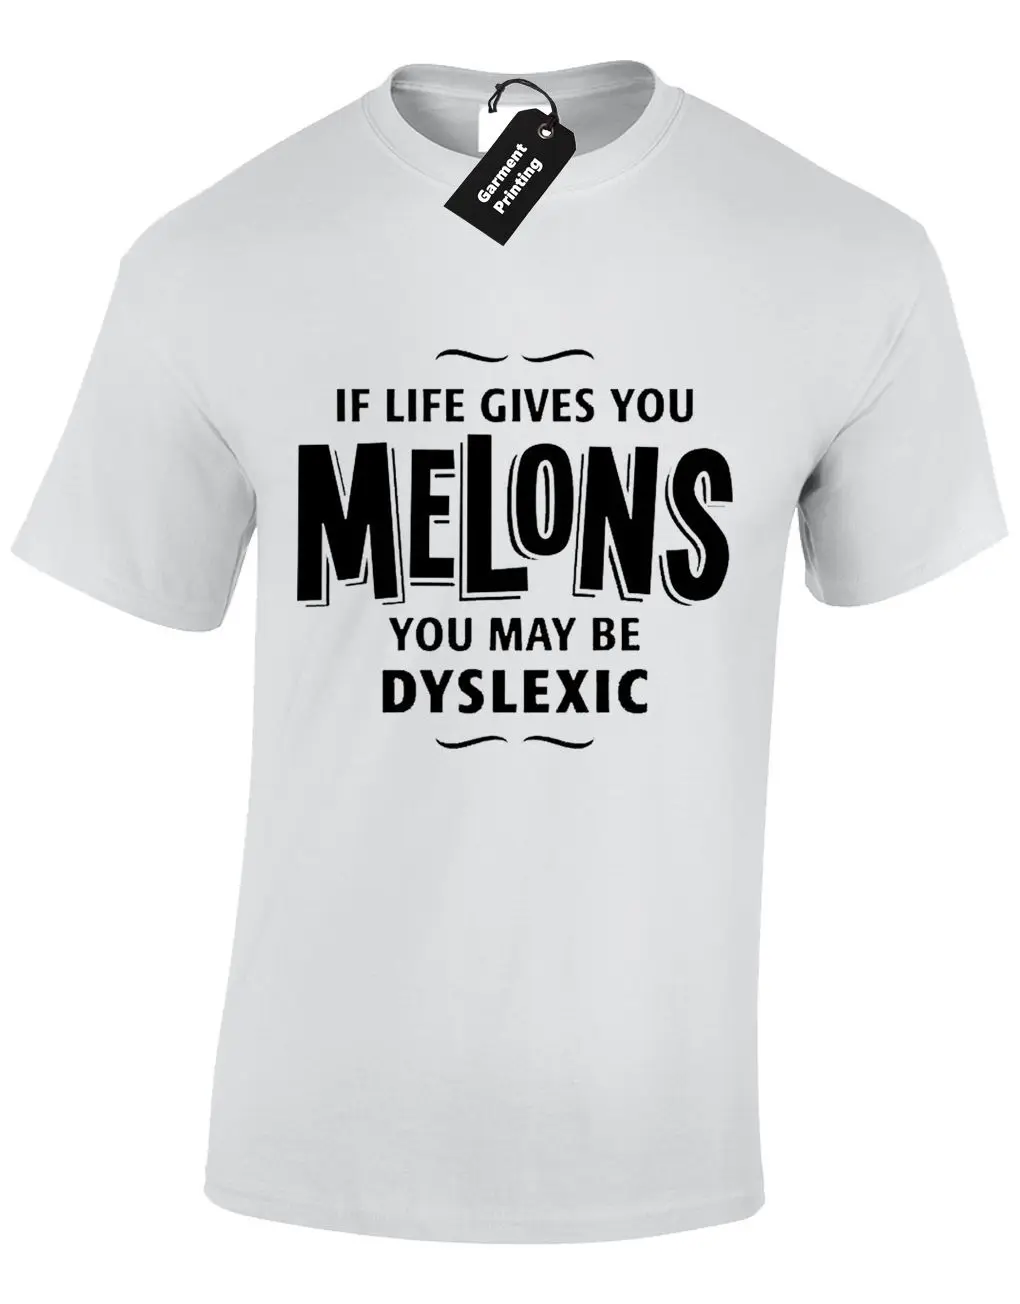 Мужская футболка с надписью IF LIFE Give YOU MELONS карикатура DYSLEXIA новинка со слоганом